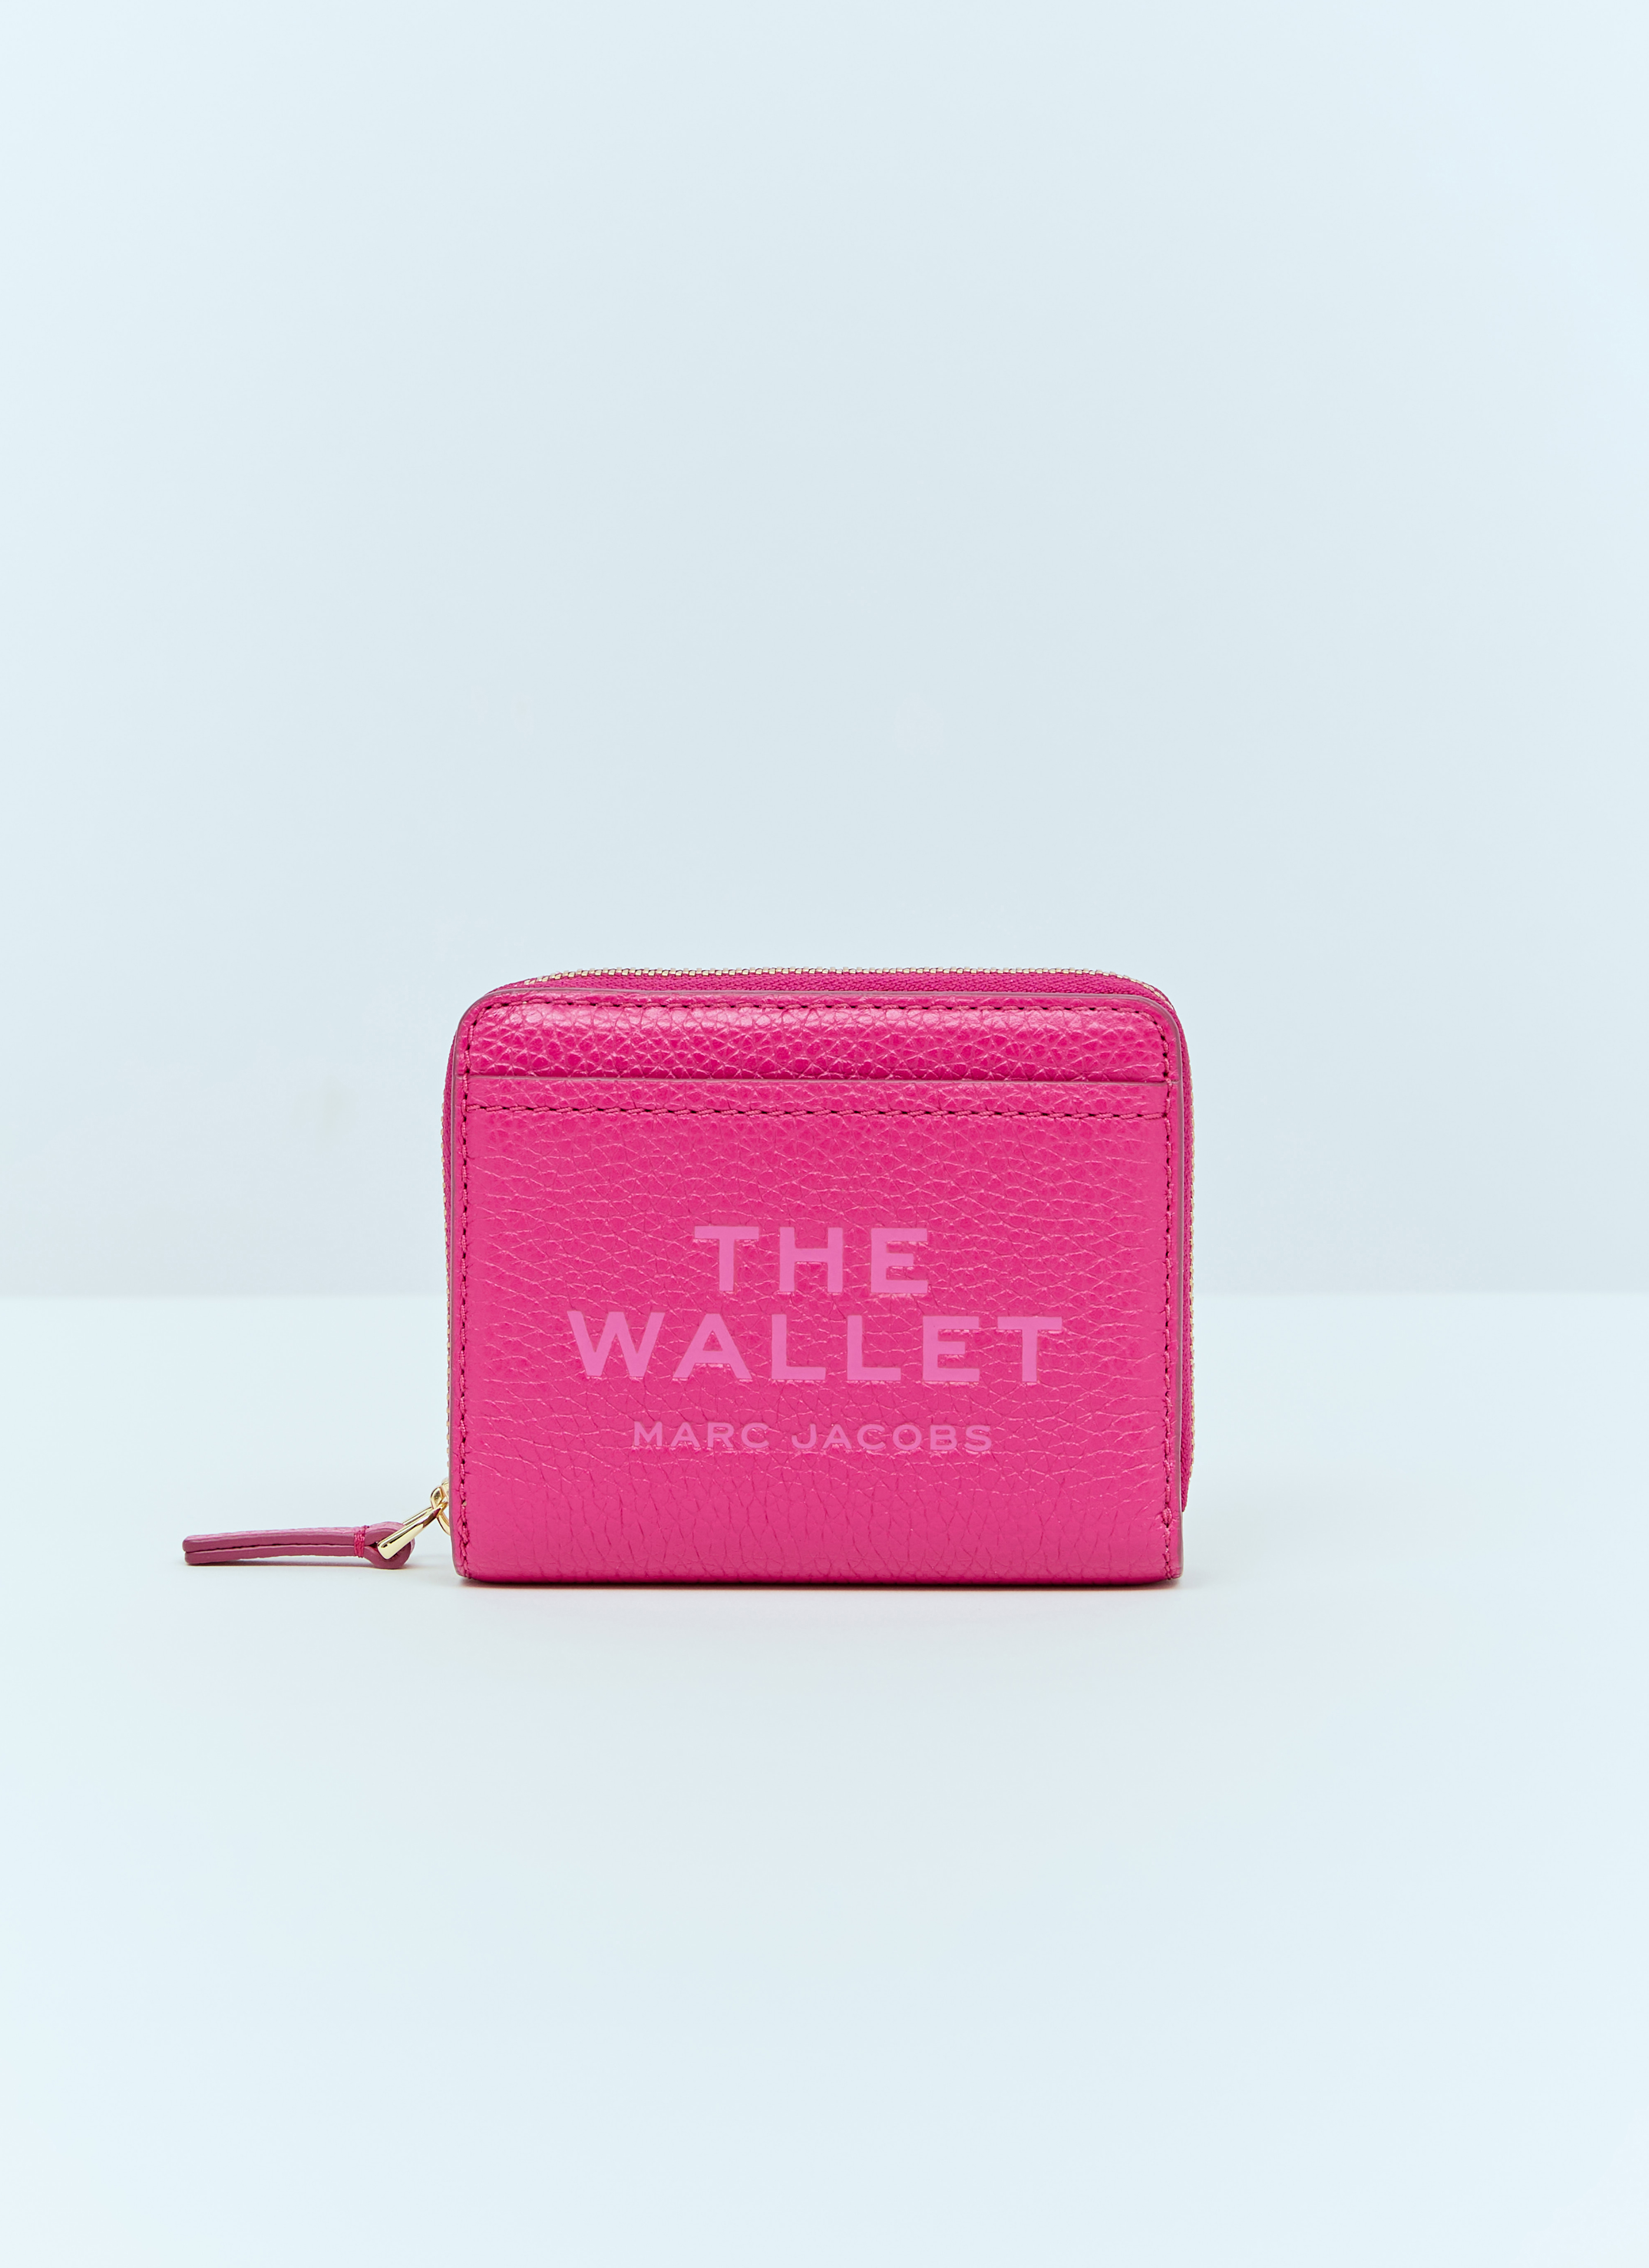 Marc Jacobs Wallet Purse Long Wallet Beige Woman Authentic Used | eBay